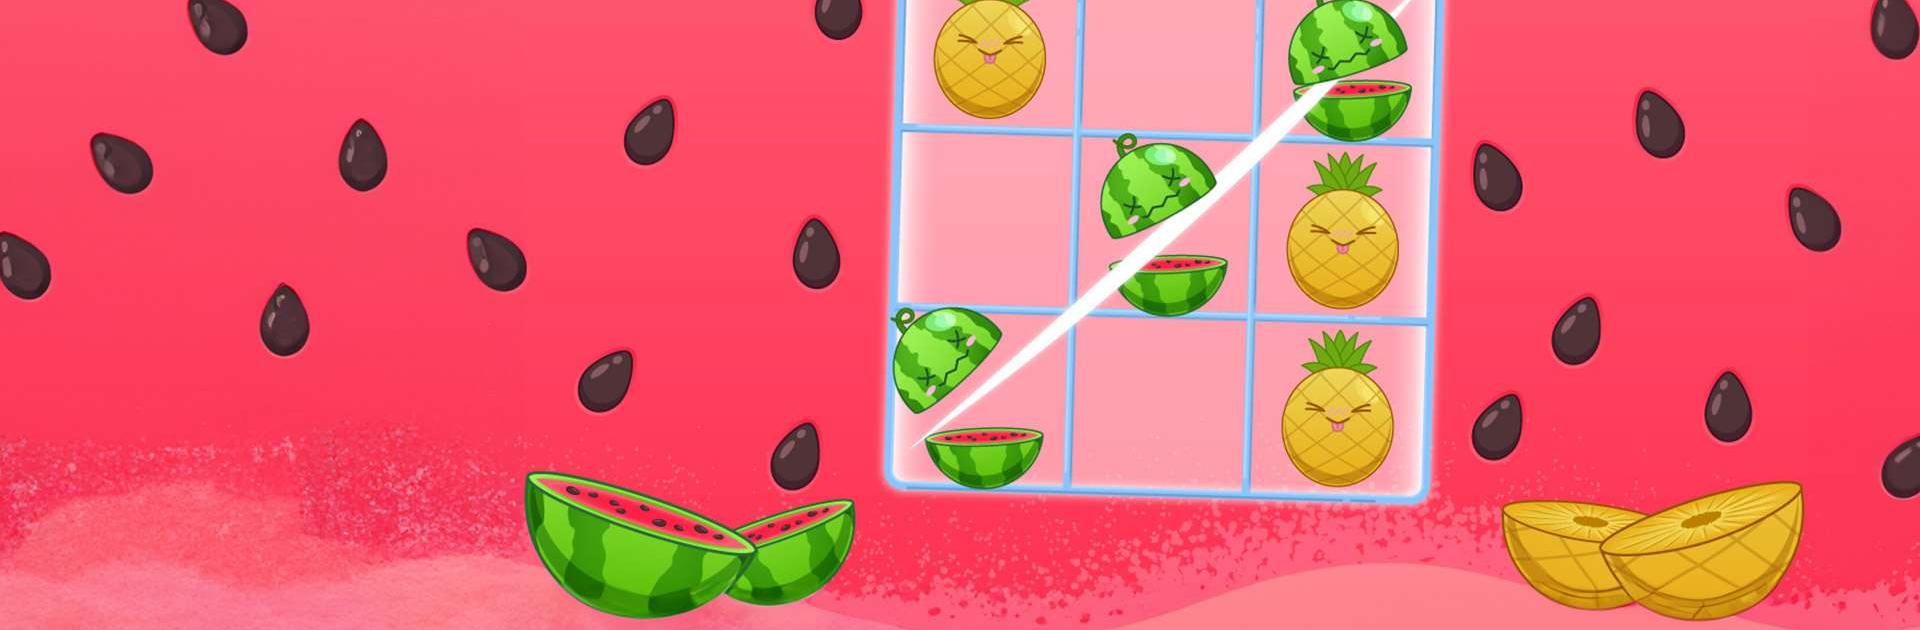 Play Watermelon Tic Tac Toe Online